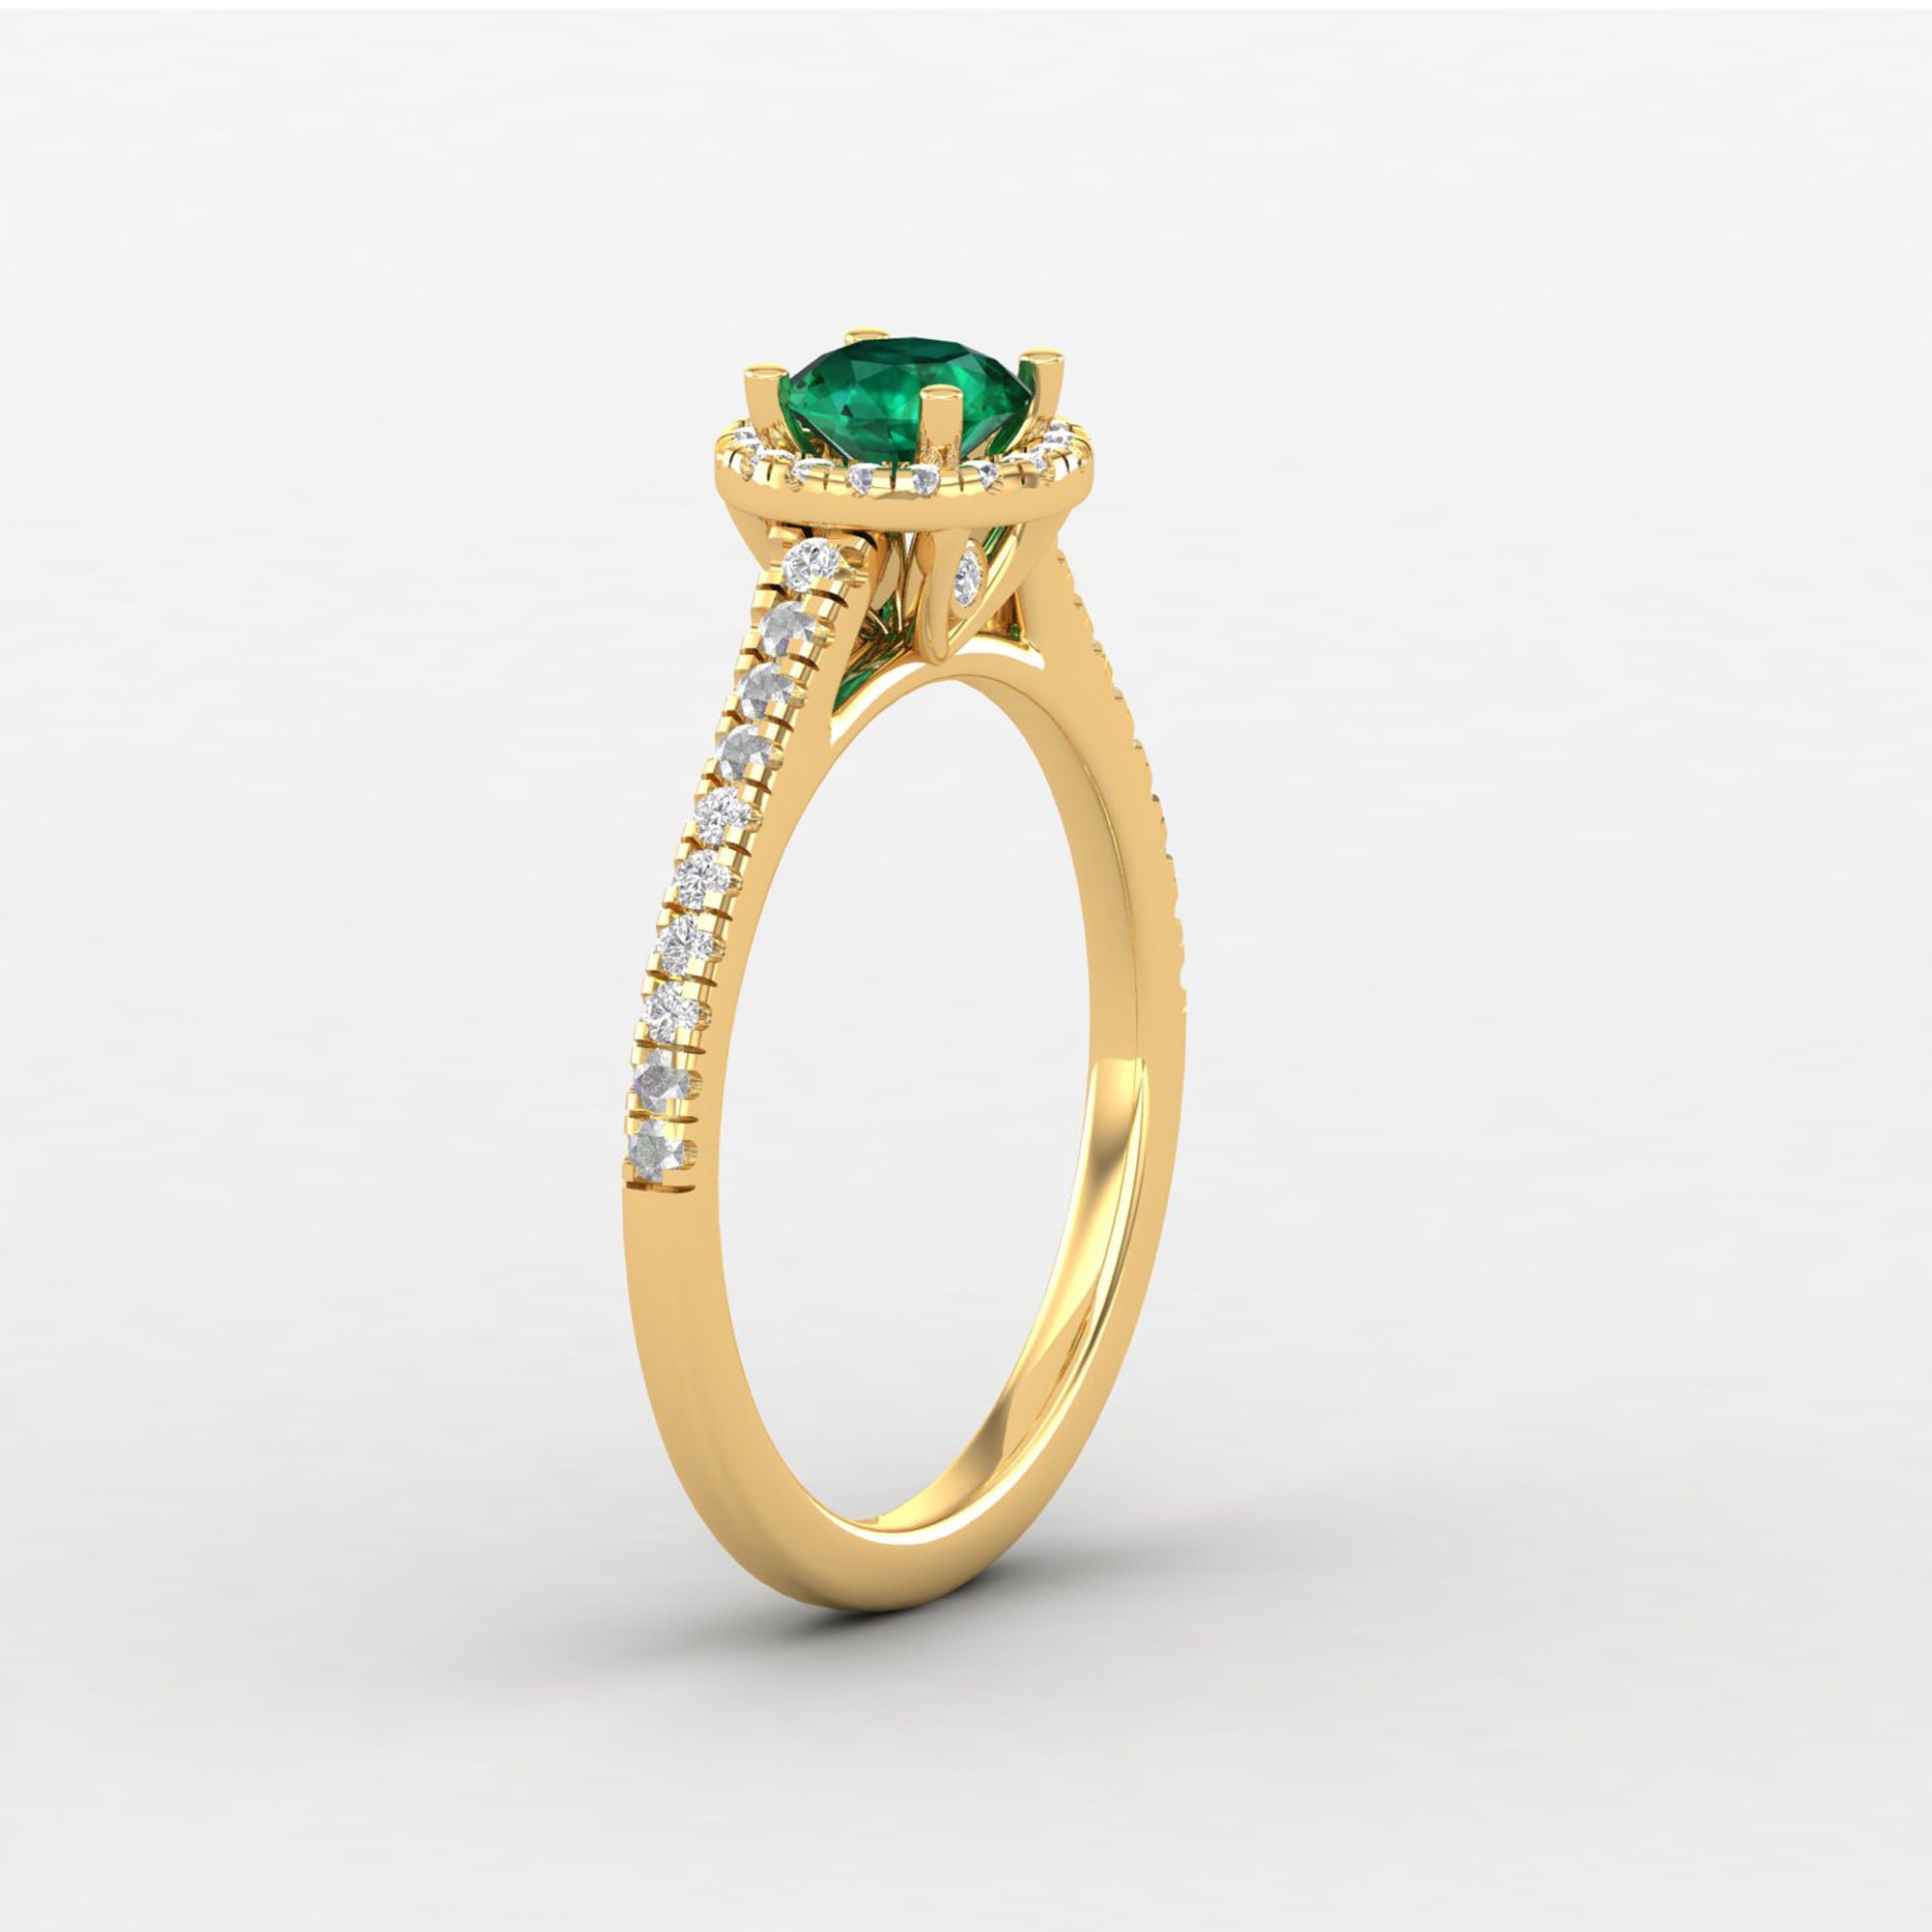 Art Nouveau Emerald Engagement Ring, Solid 14K Gold Antique Edwardian Wedding Dainty Unique Rings For Women